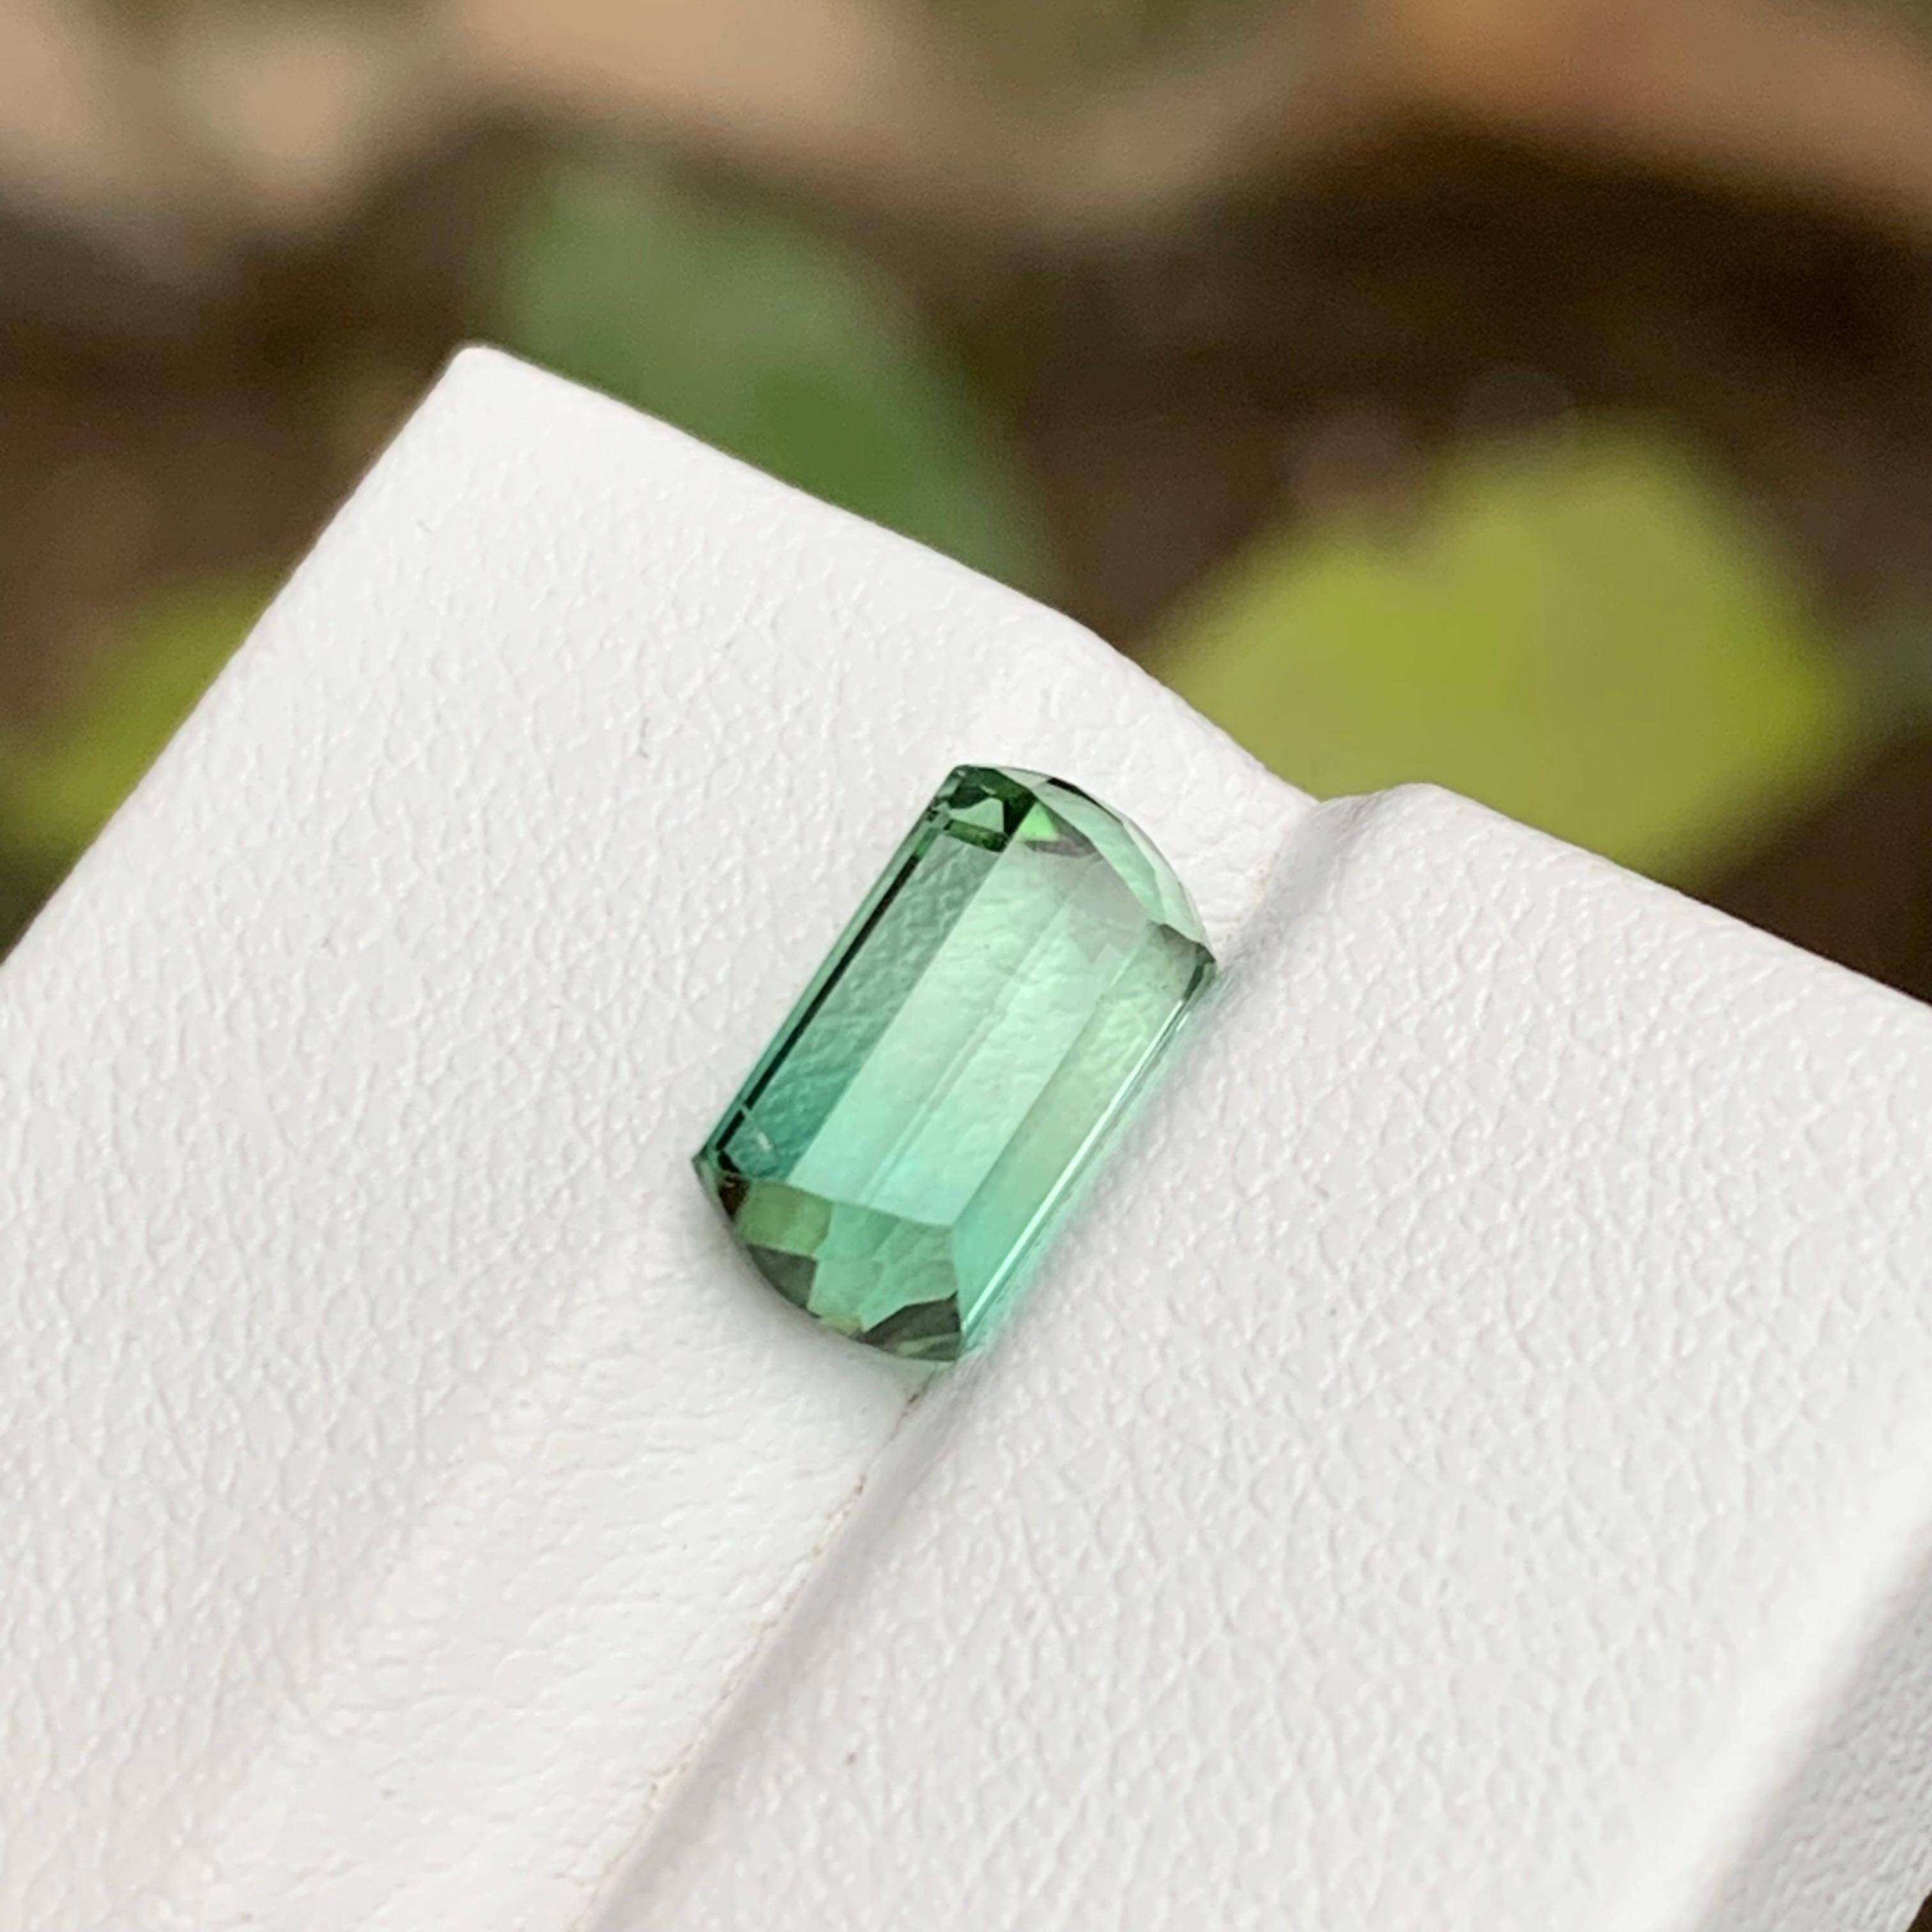 Rare Neon Bluish Green Bicolor Tourmaline Gemstone, 2.5 Ct Modified Emerald Cut For Sale 3